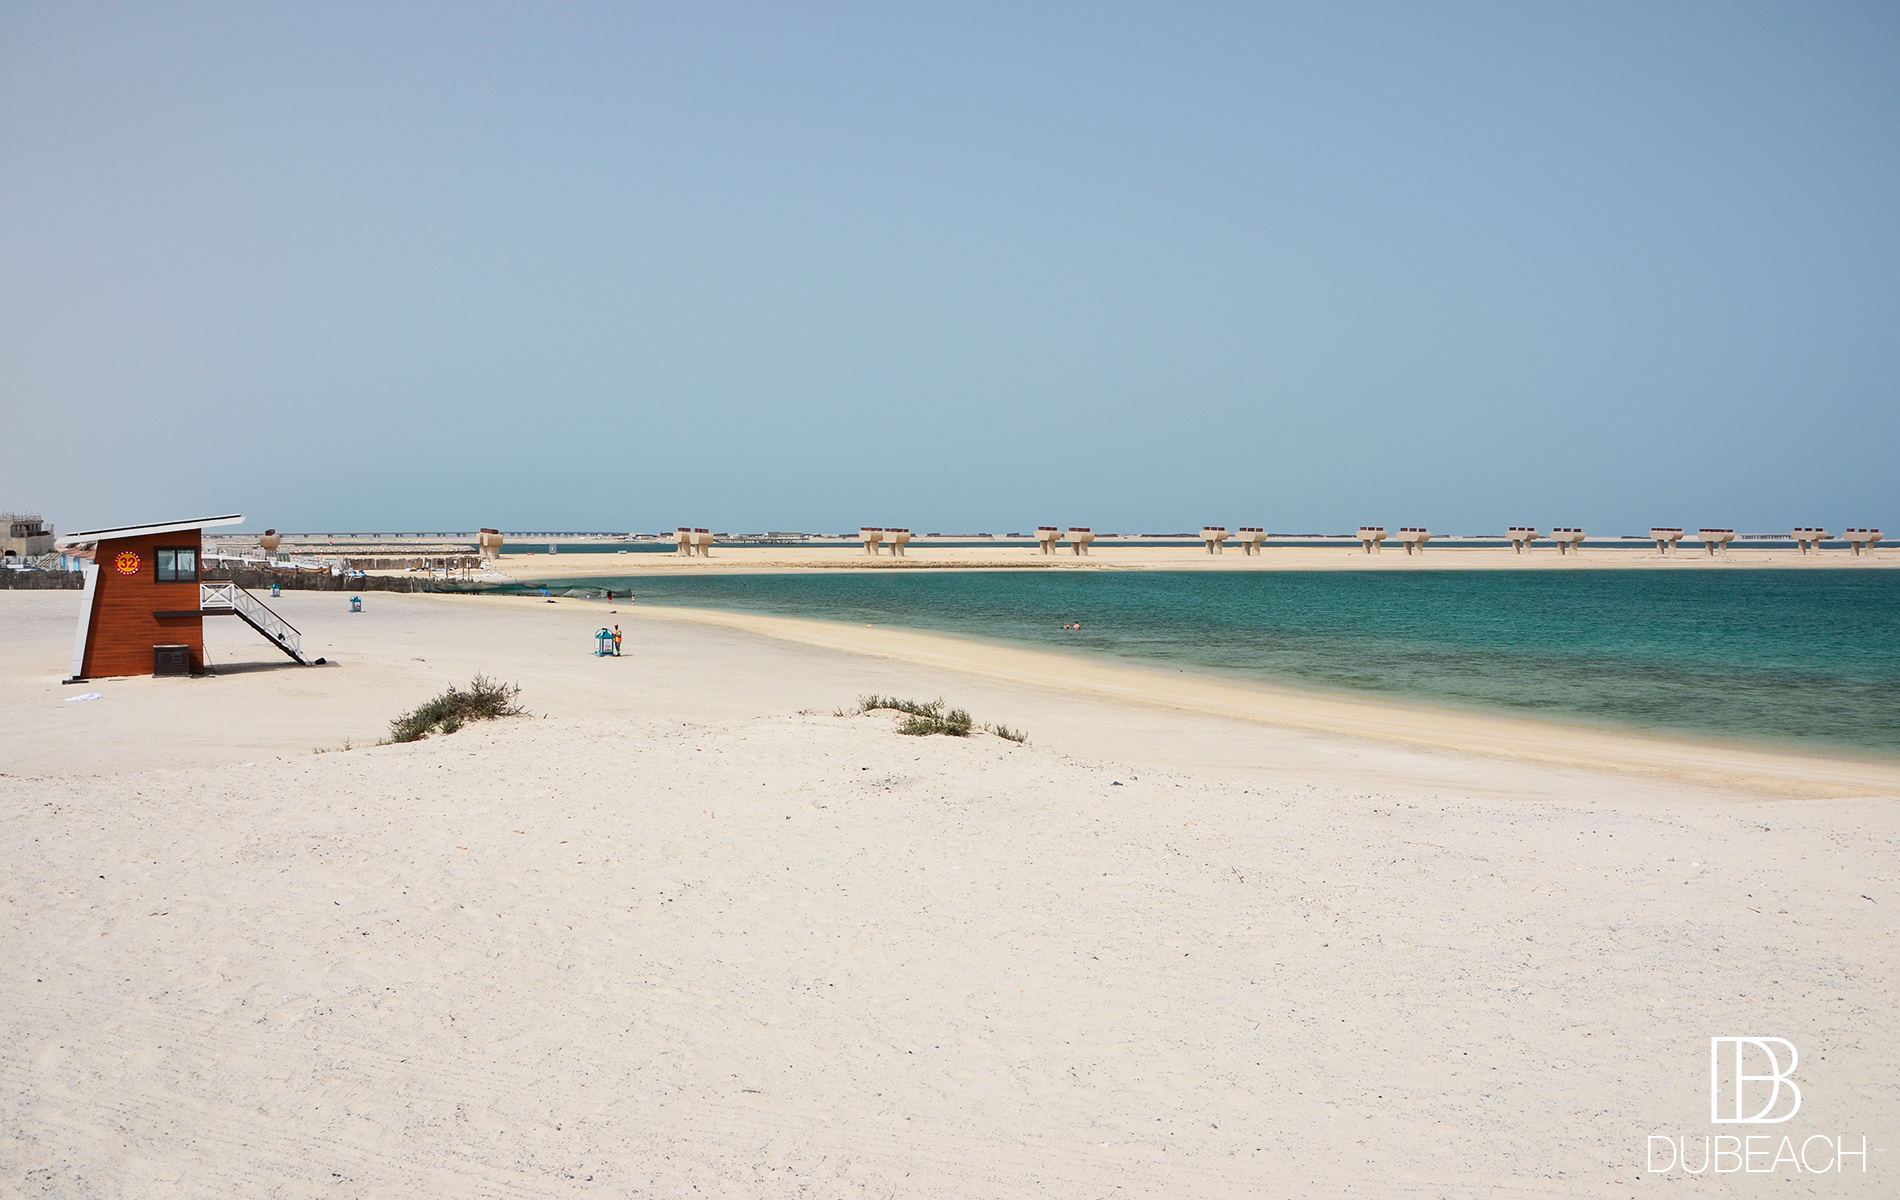 Jebel Ali Dog Beach, Pet-friendly beach 